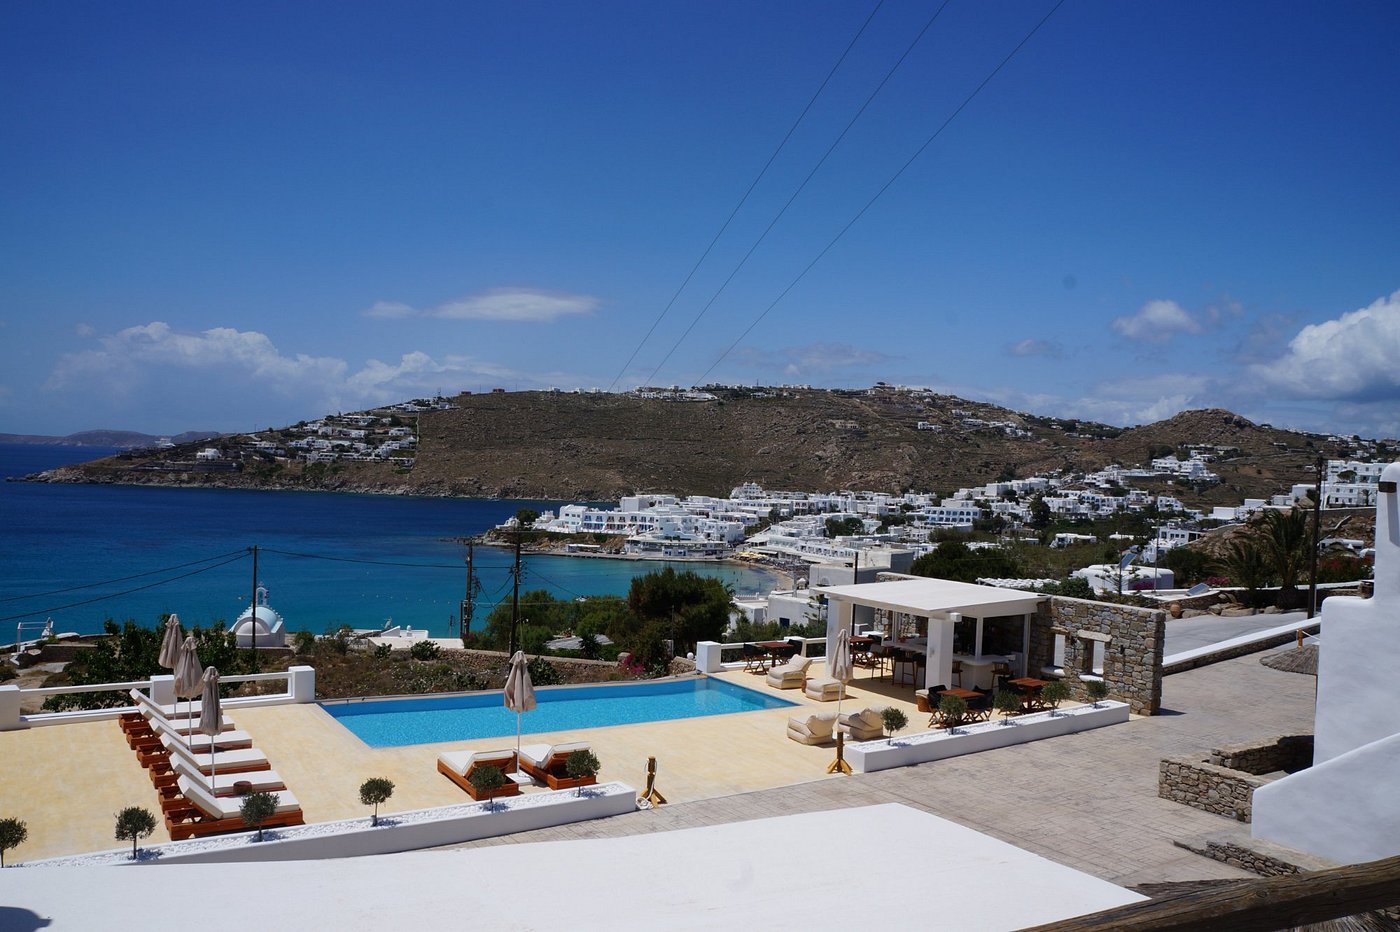 Seethrough Mykonos Apartments & Suites - Greece Hotel - Prices & Reviews